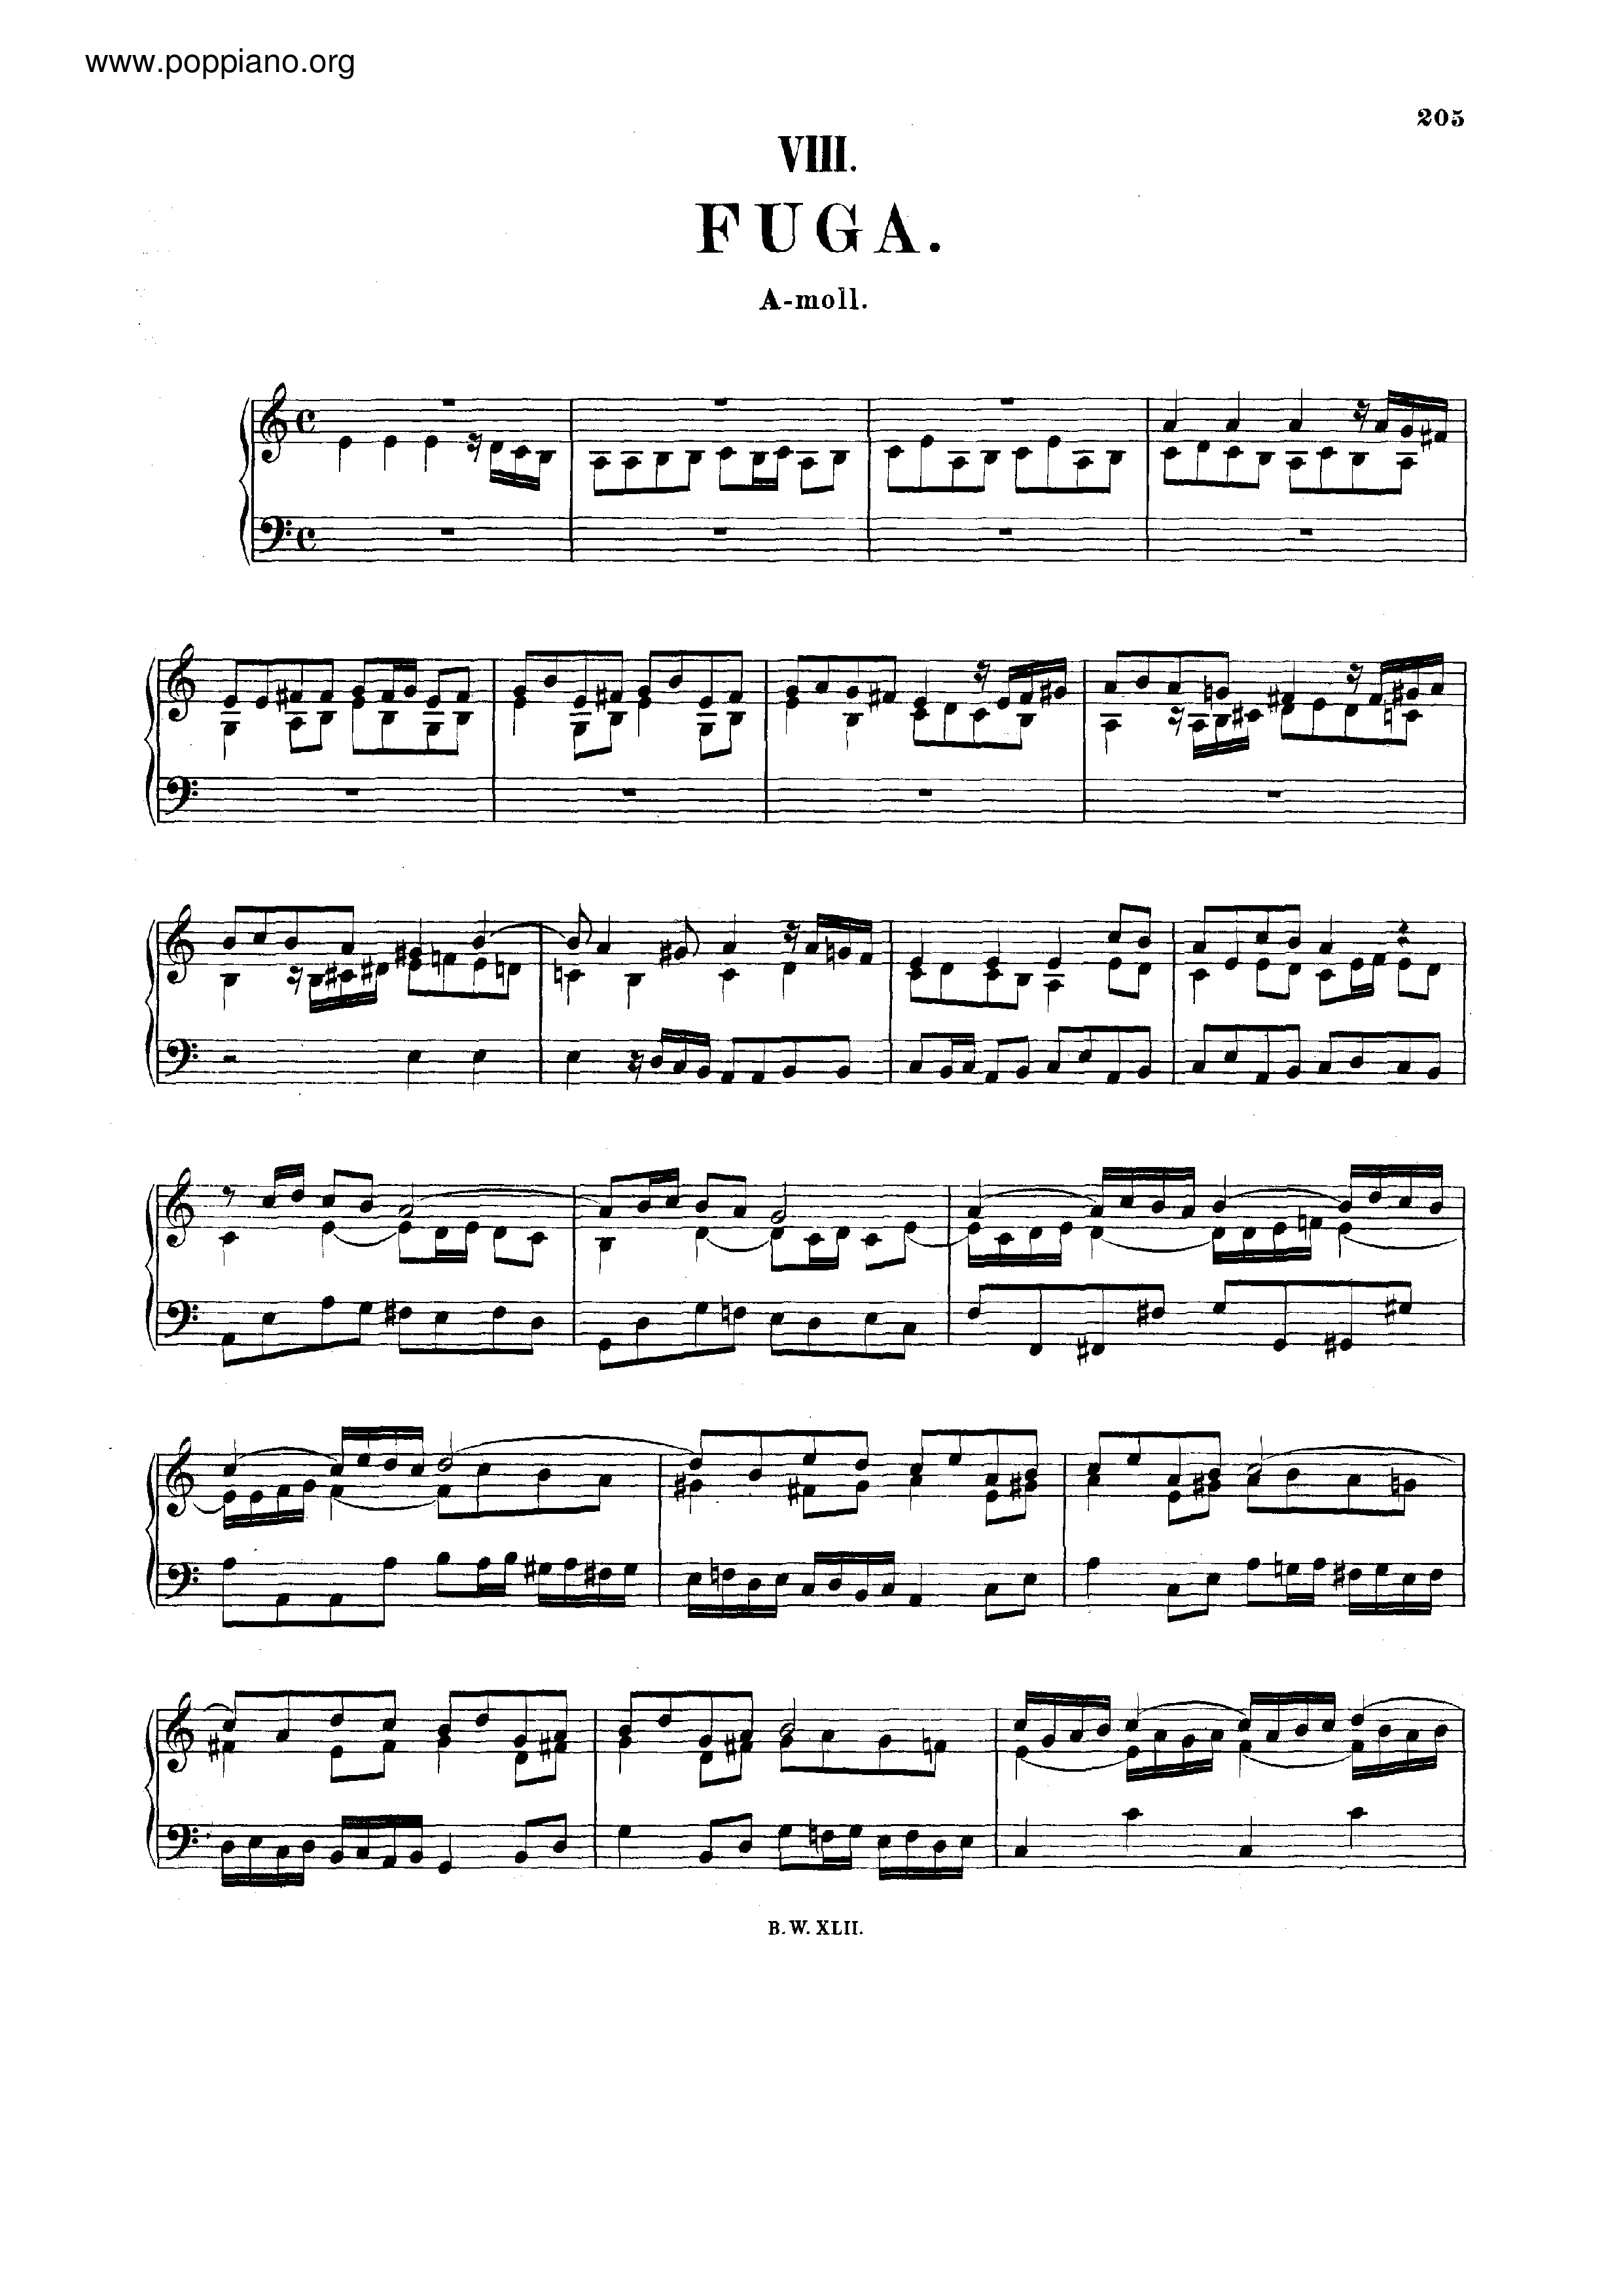 Fugue in A minor, BWV 958ピアノ譜